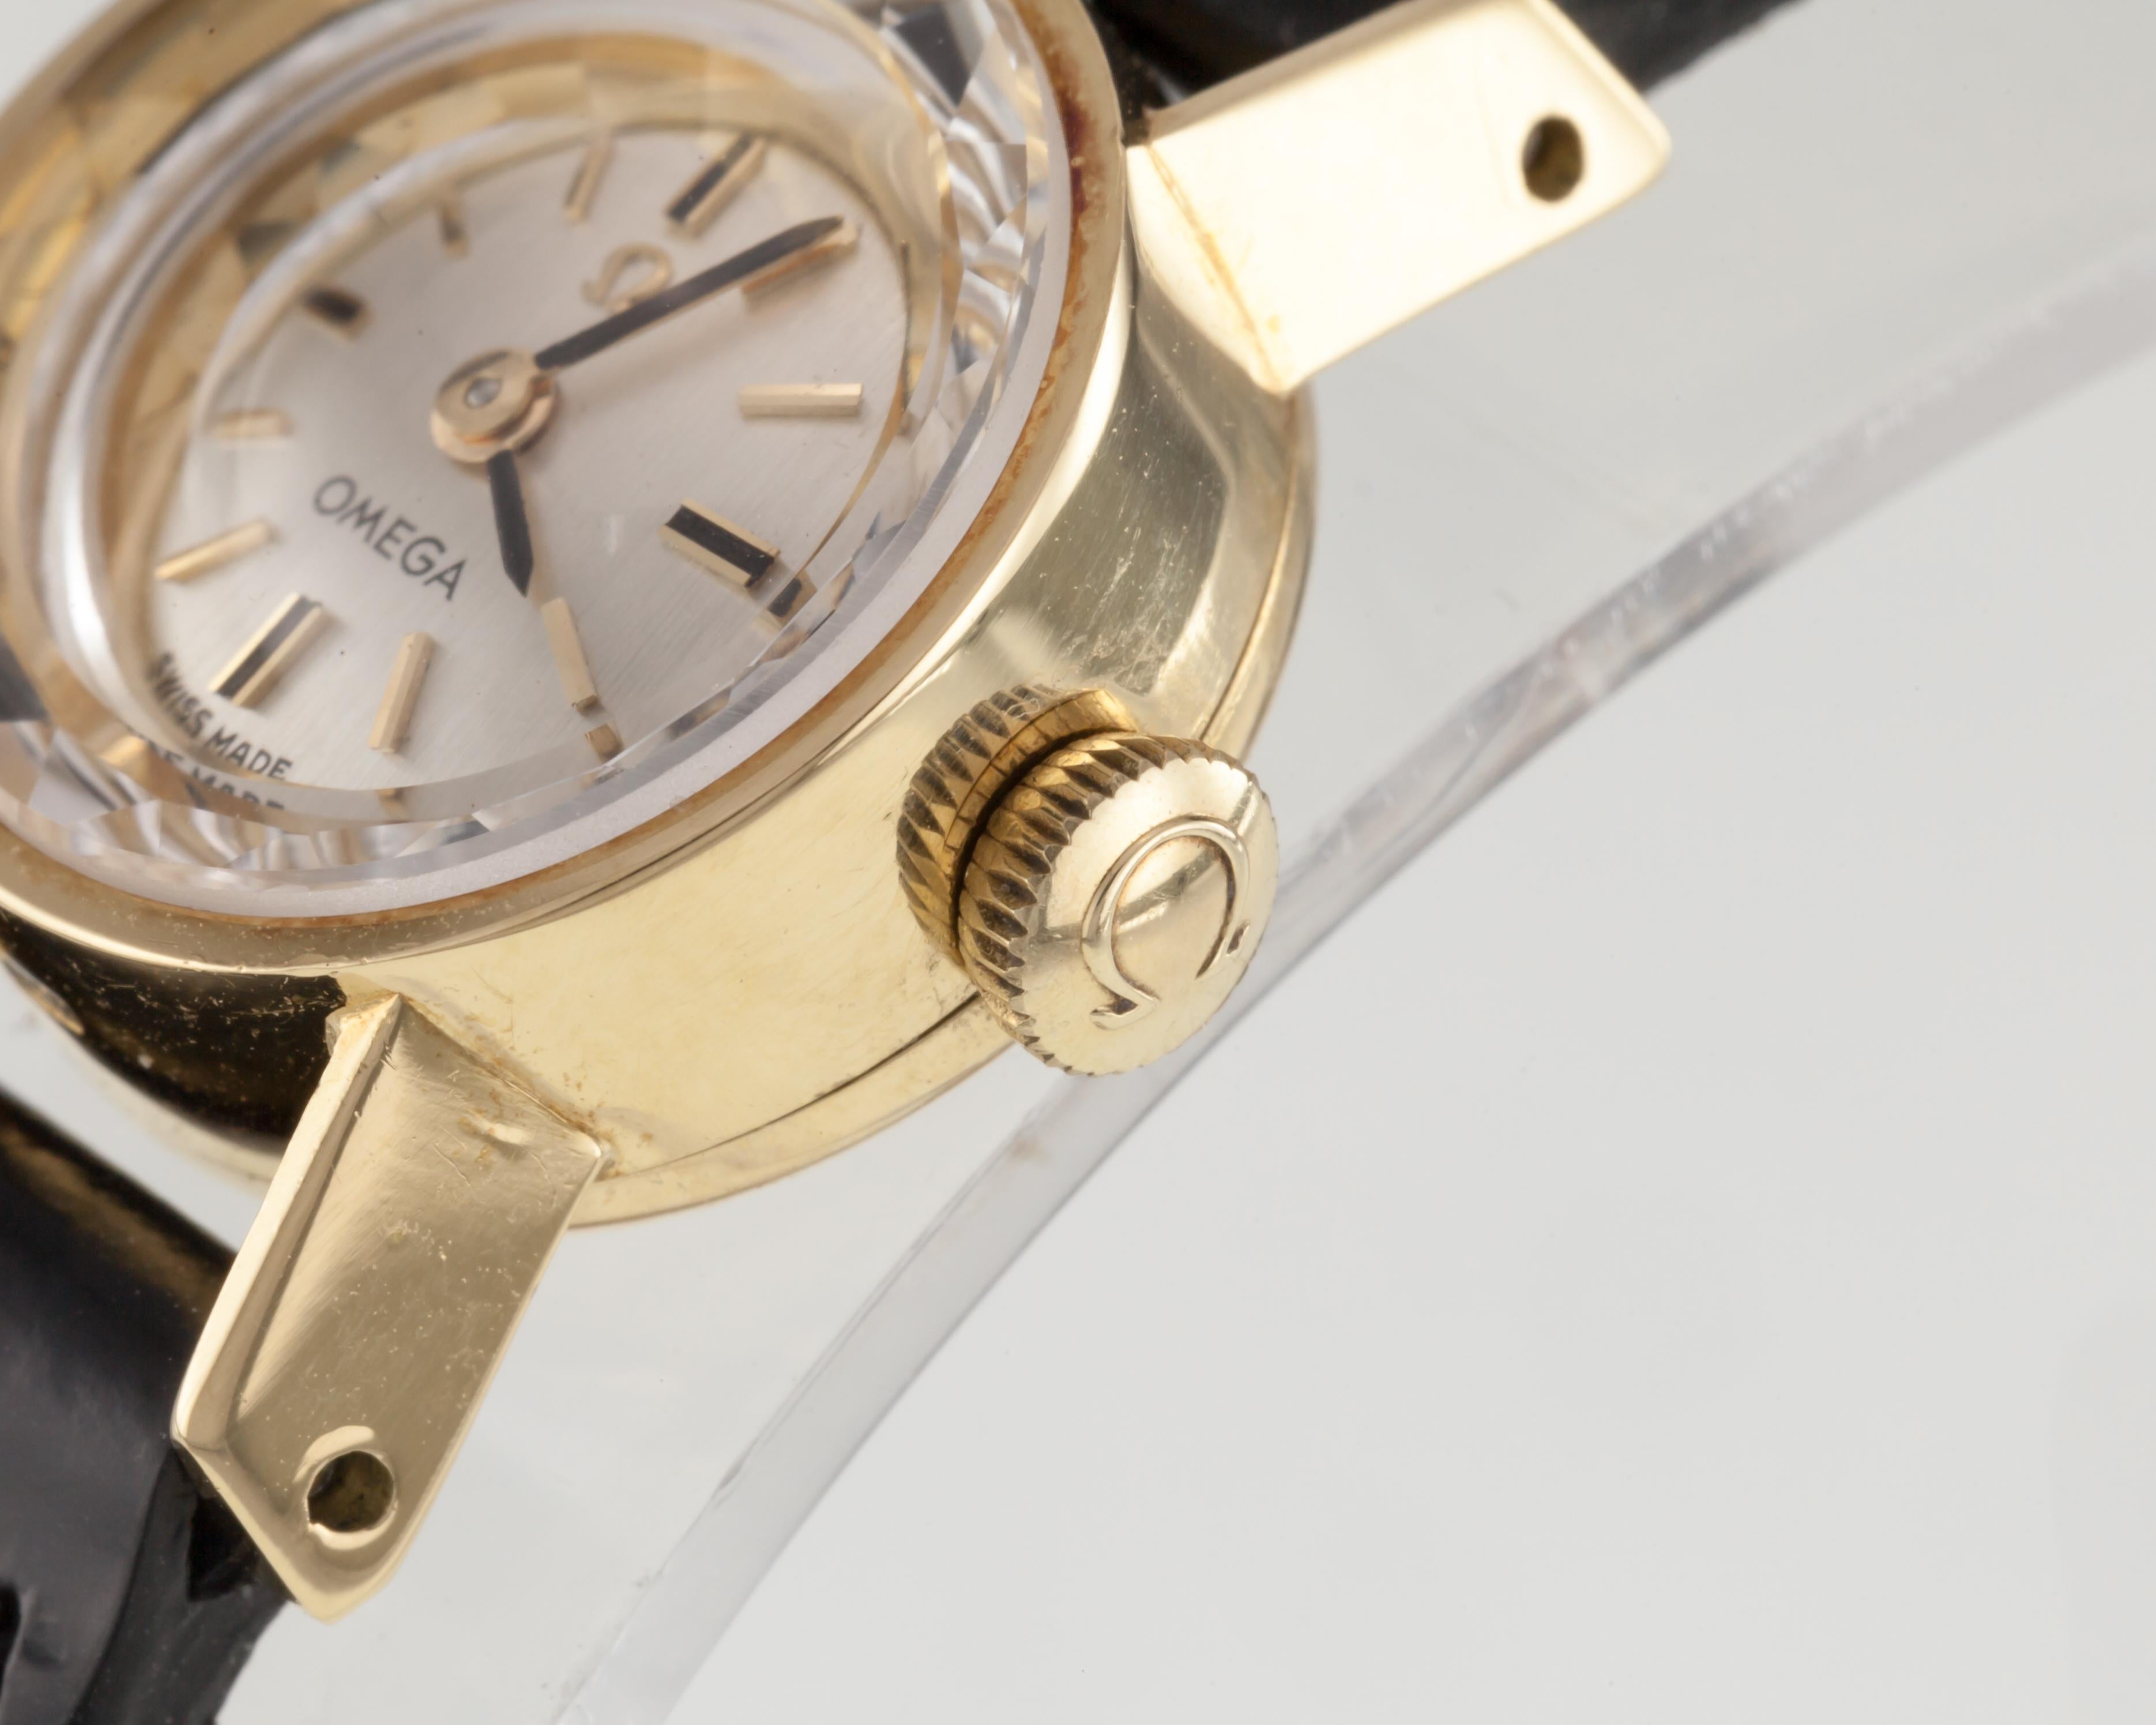 omega gold dress watch